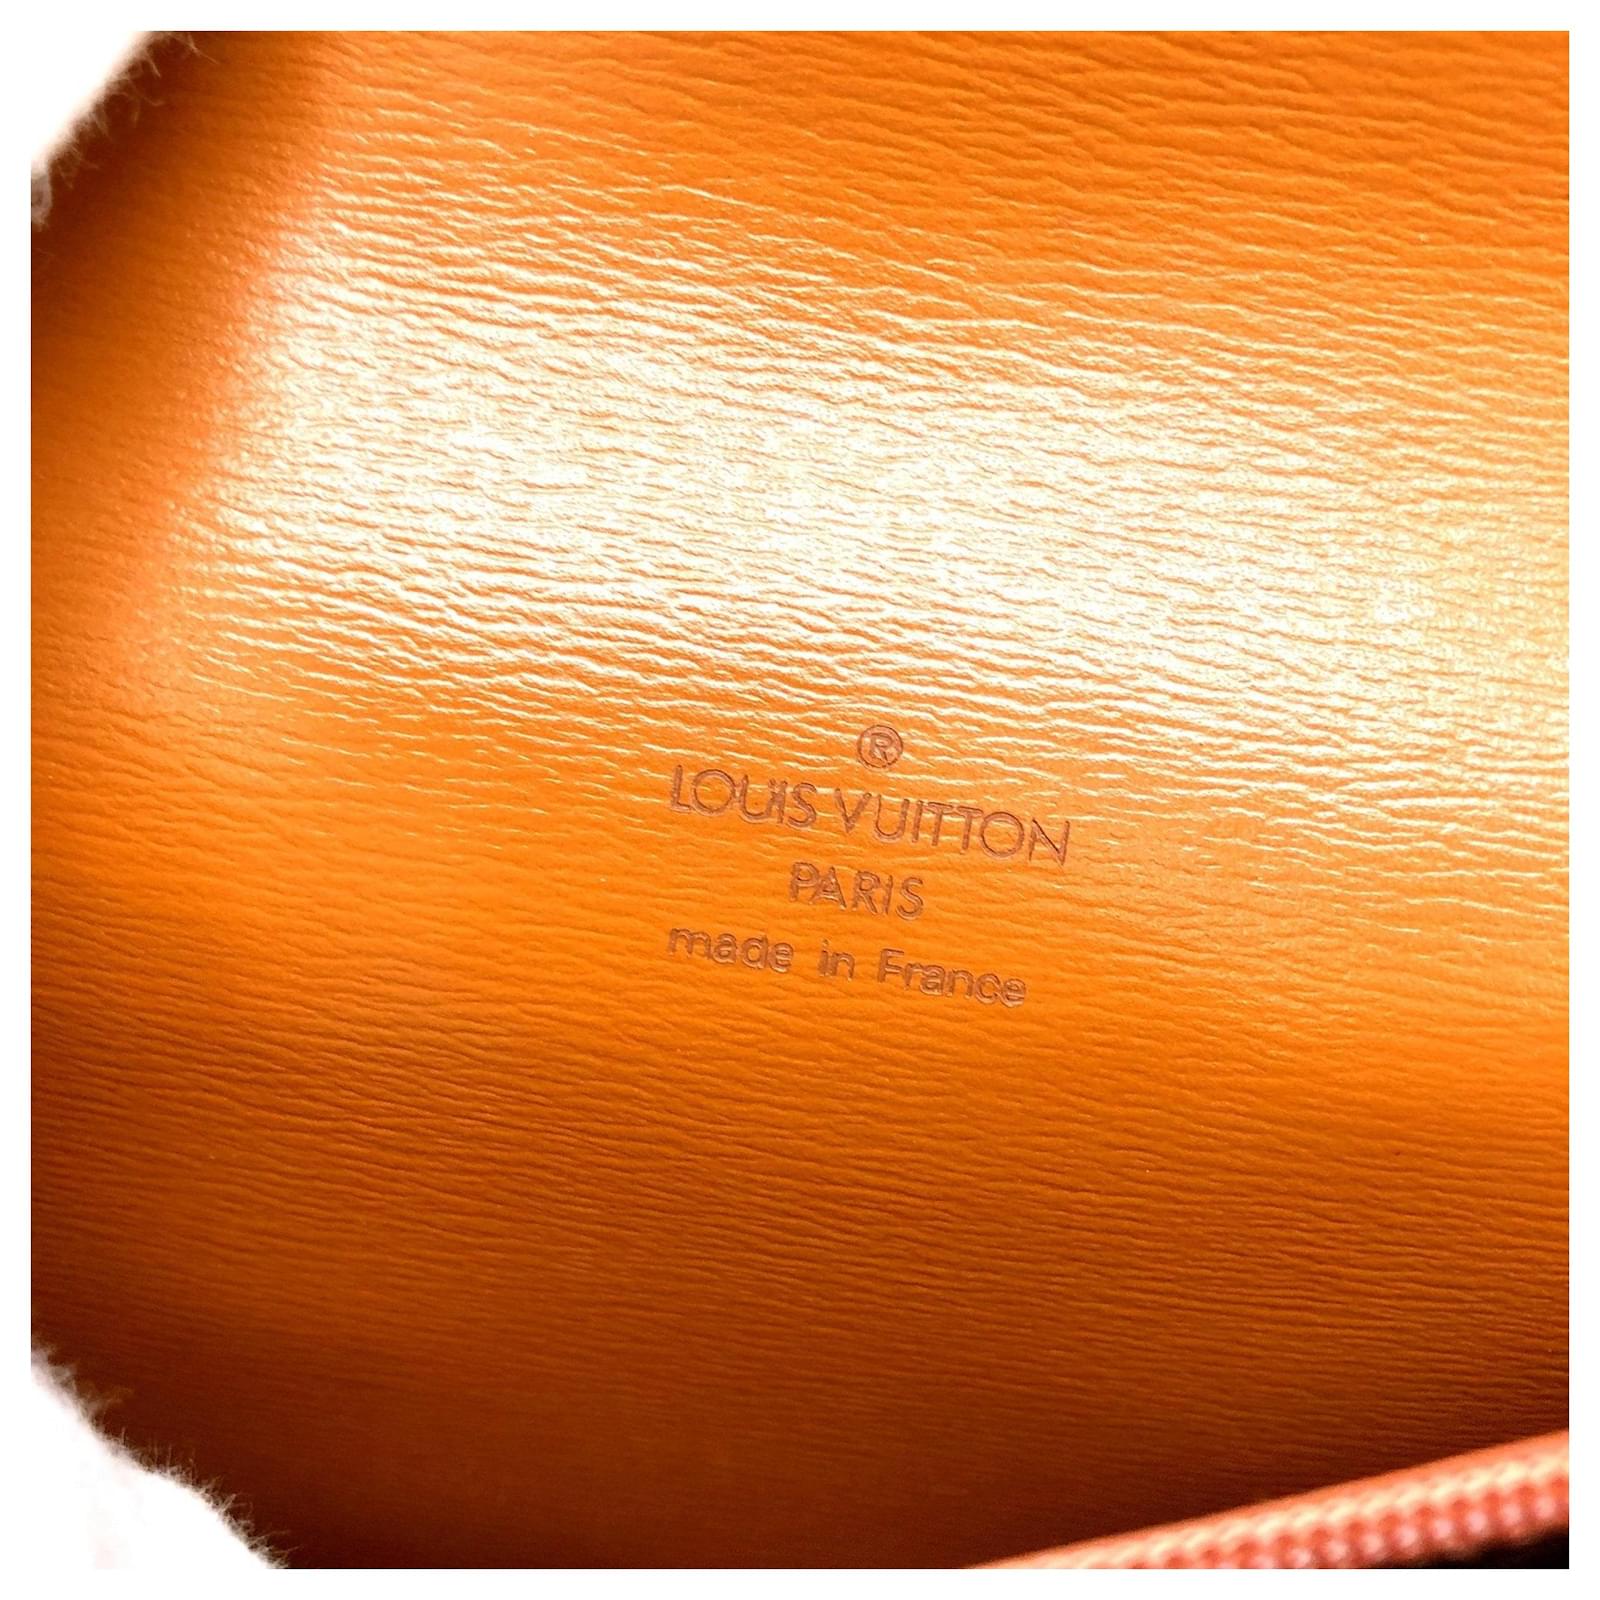 Louis VUITTON: Tilsitt bag in camel pi leather, flap c…